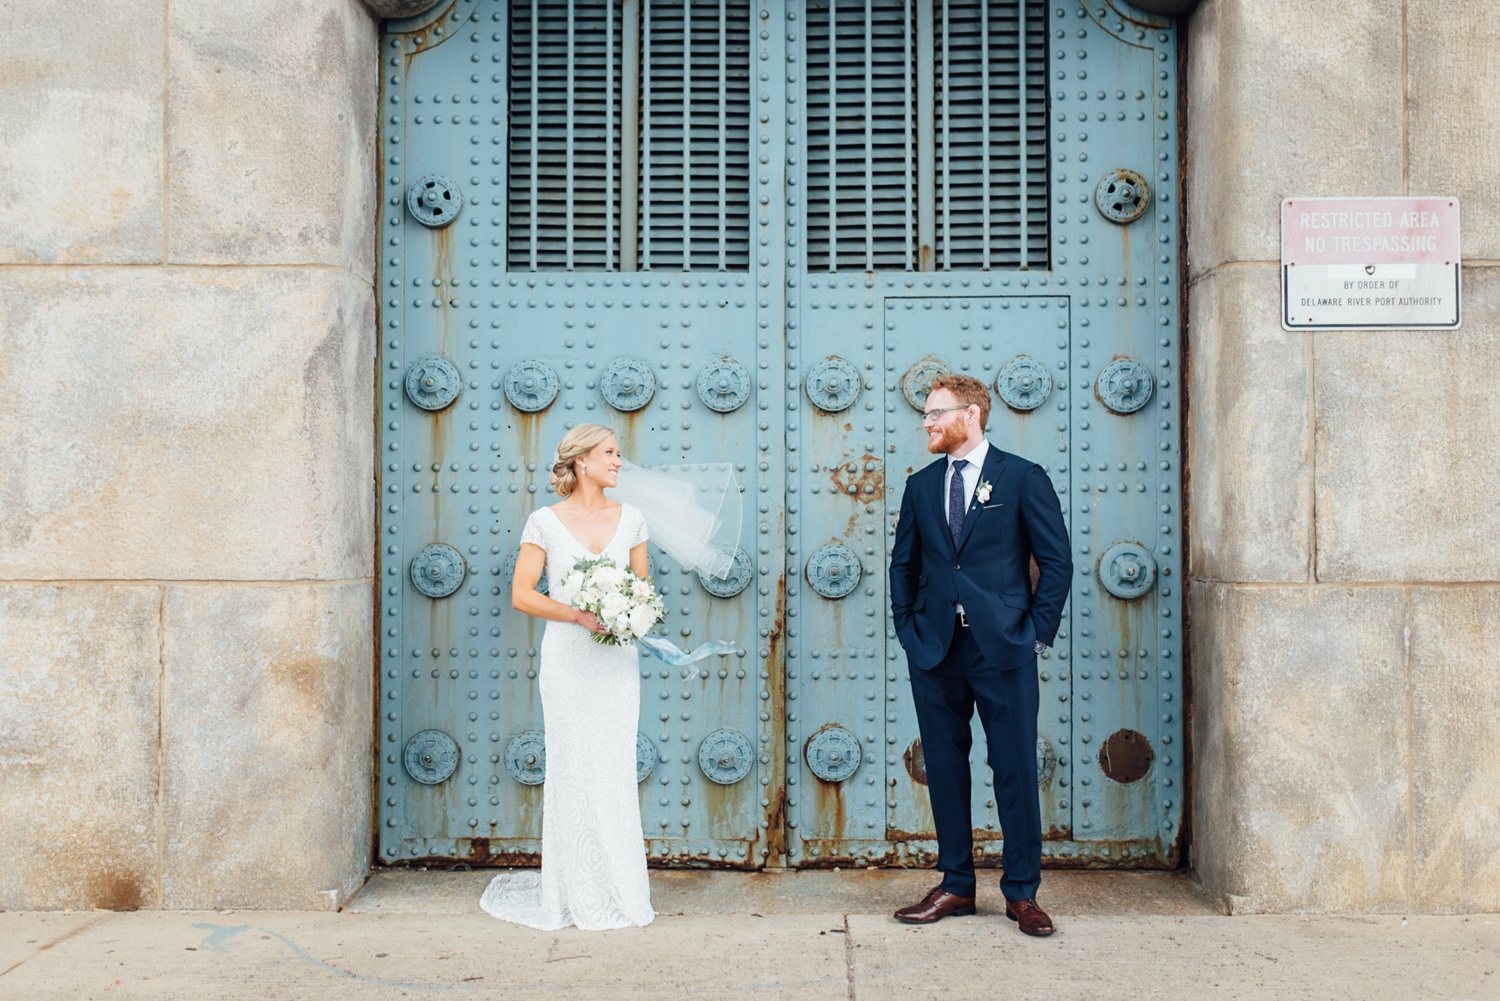 Allie + Jeremy - Race Street Pier Wedding - Philadelphia Wedding Photographer - Alison Dunn Photography photo